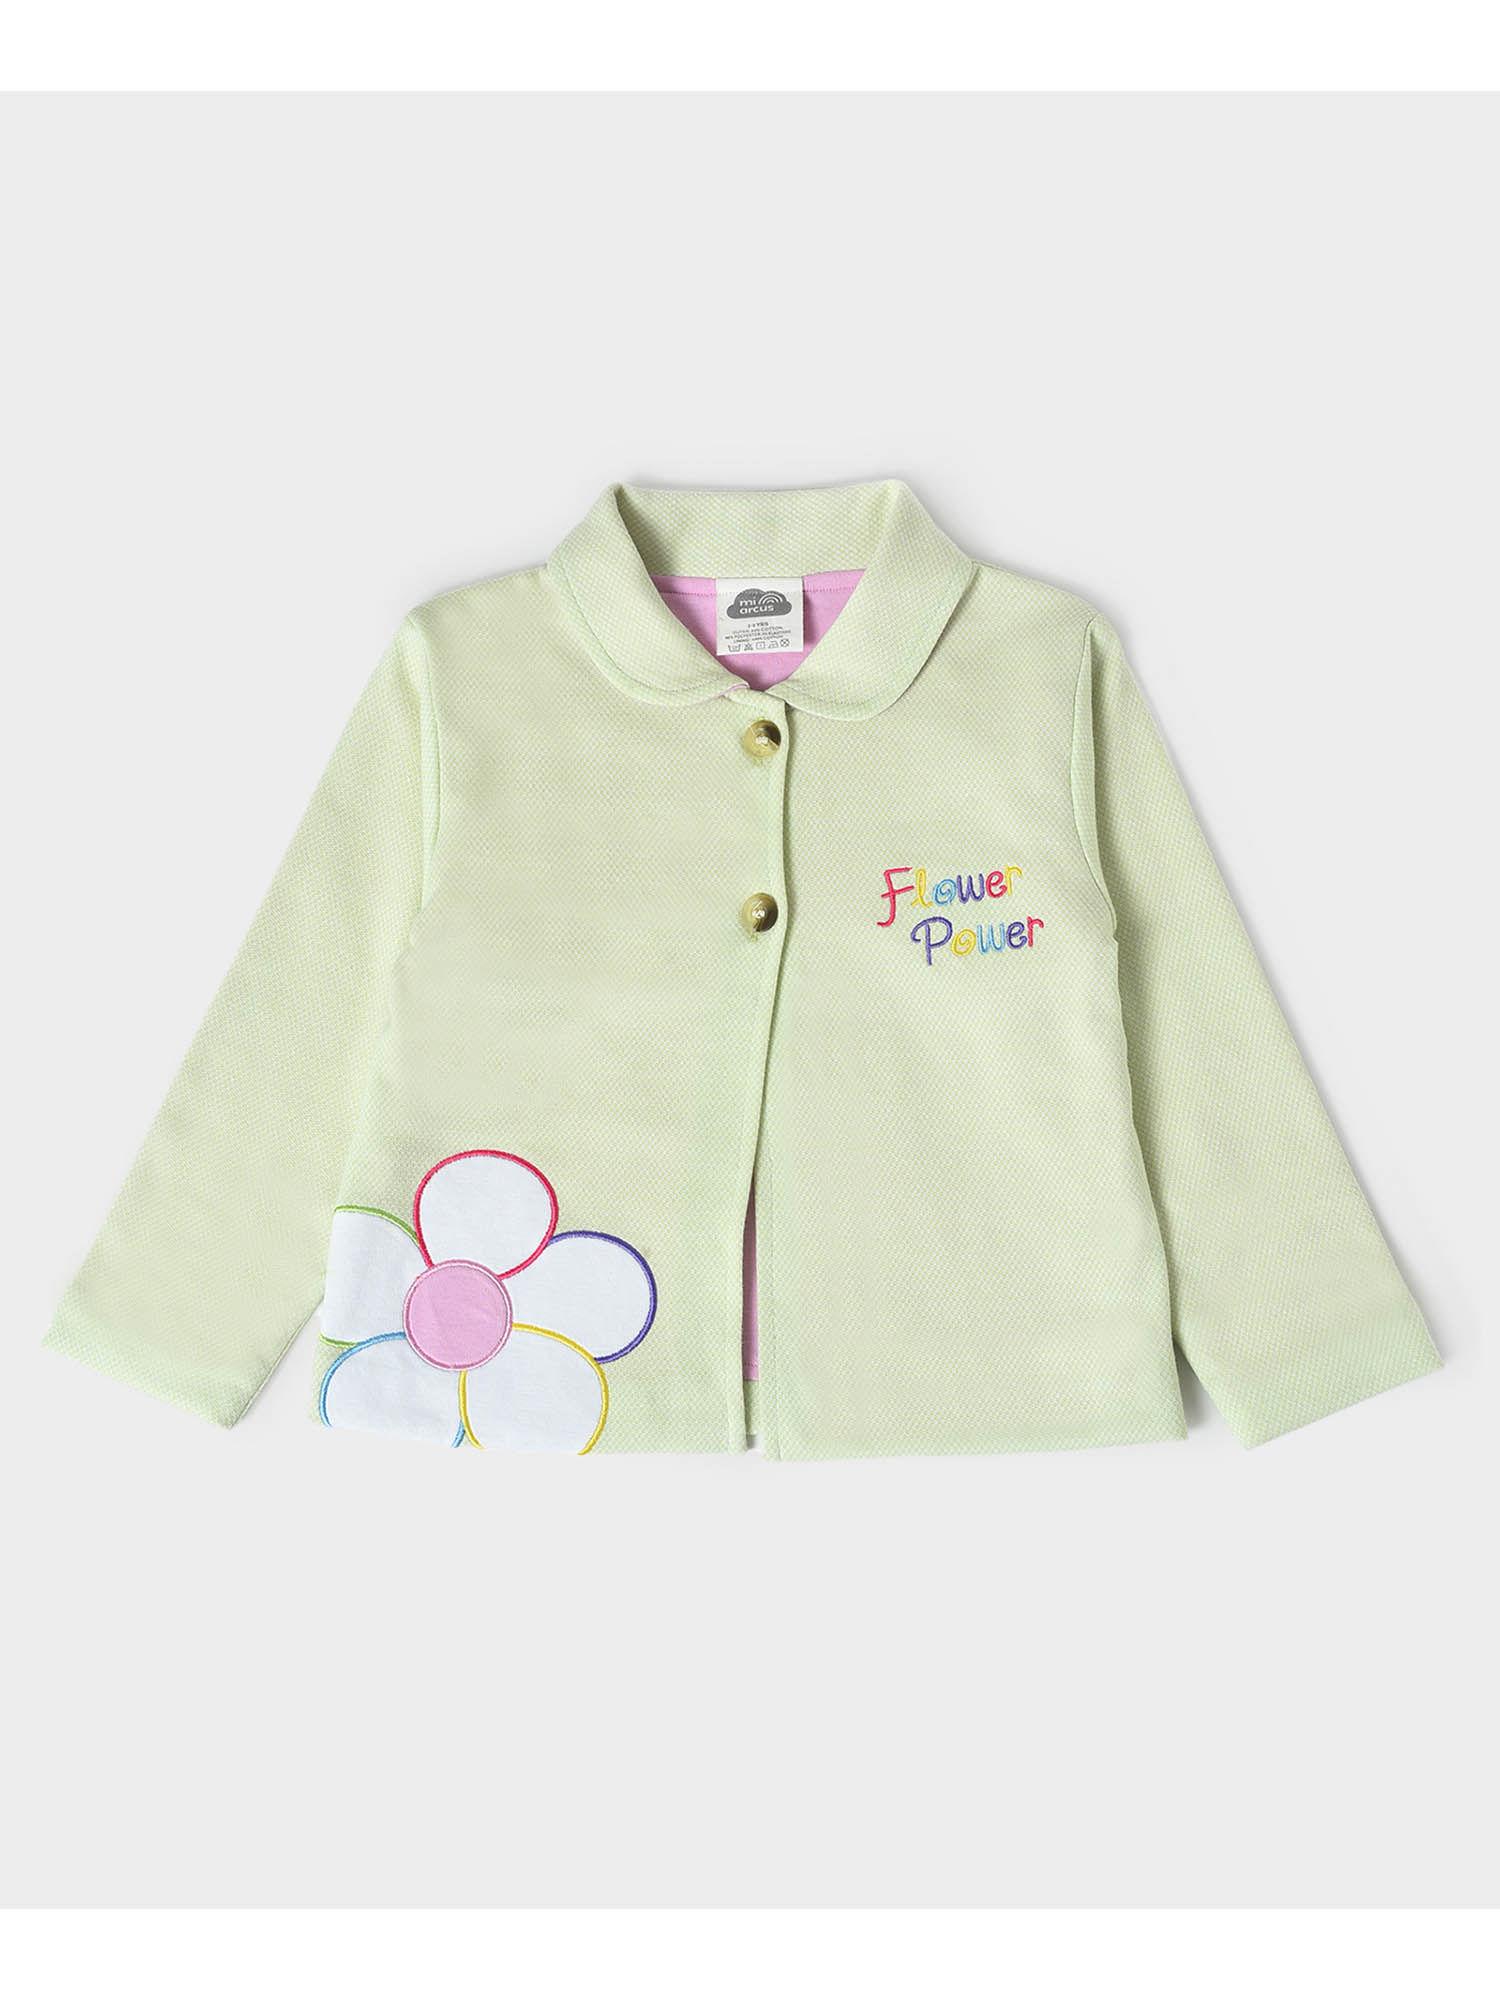 floral design blazer for baby girl